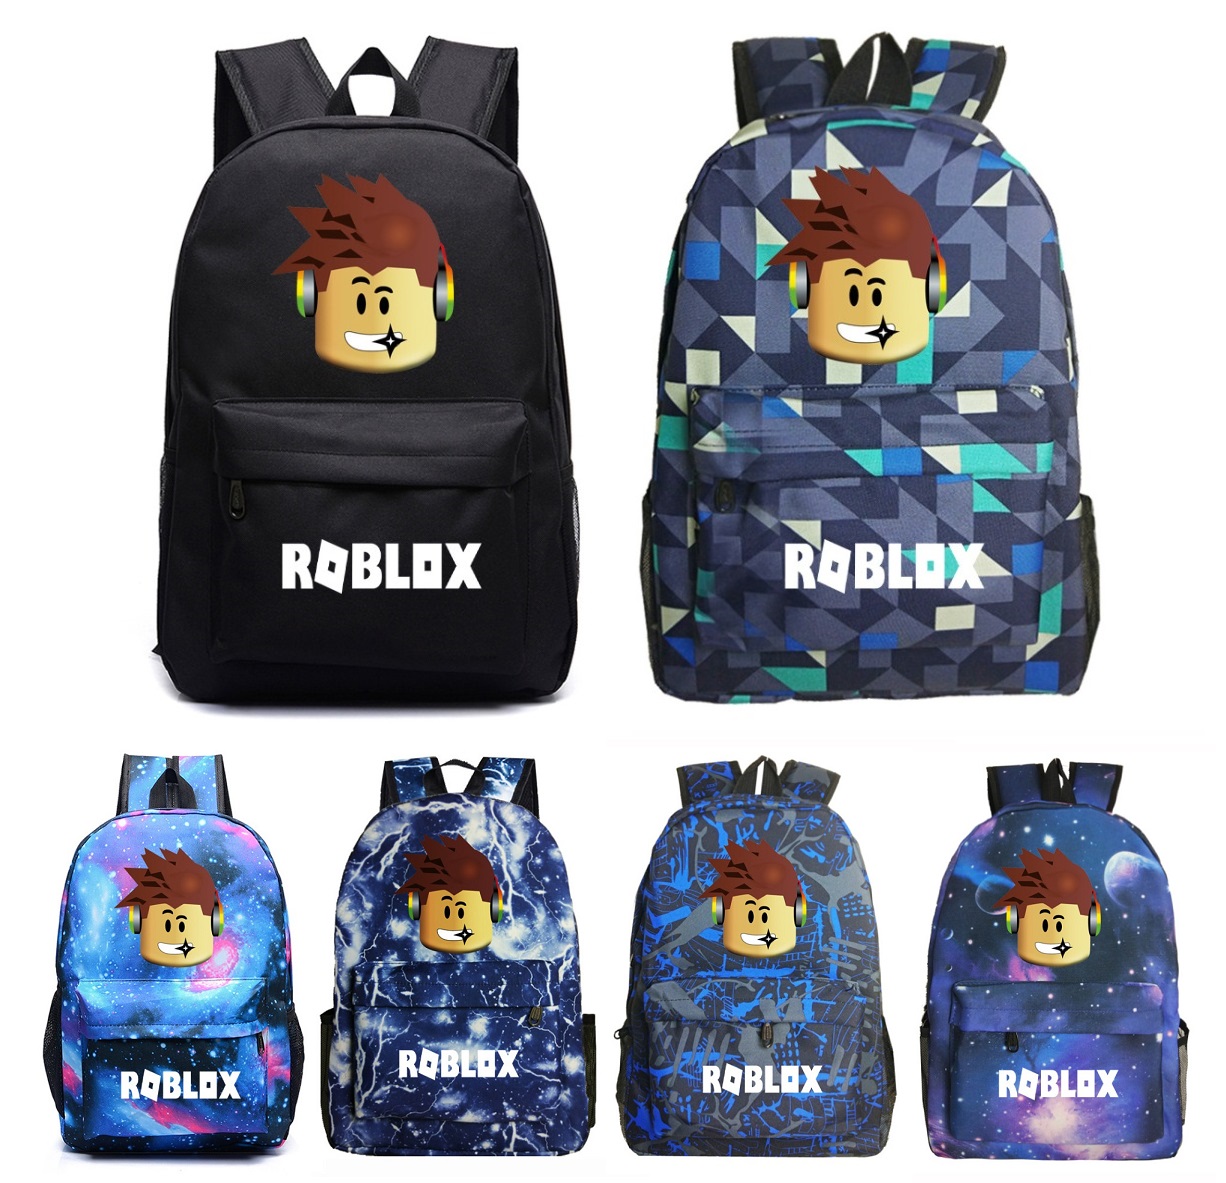 Roblox 02 Backpack Kids School Bag - roblox backpack fortee apparel